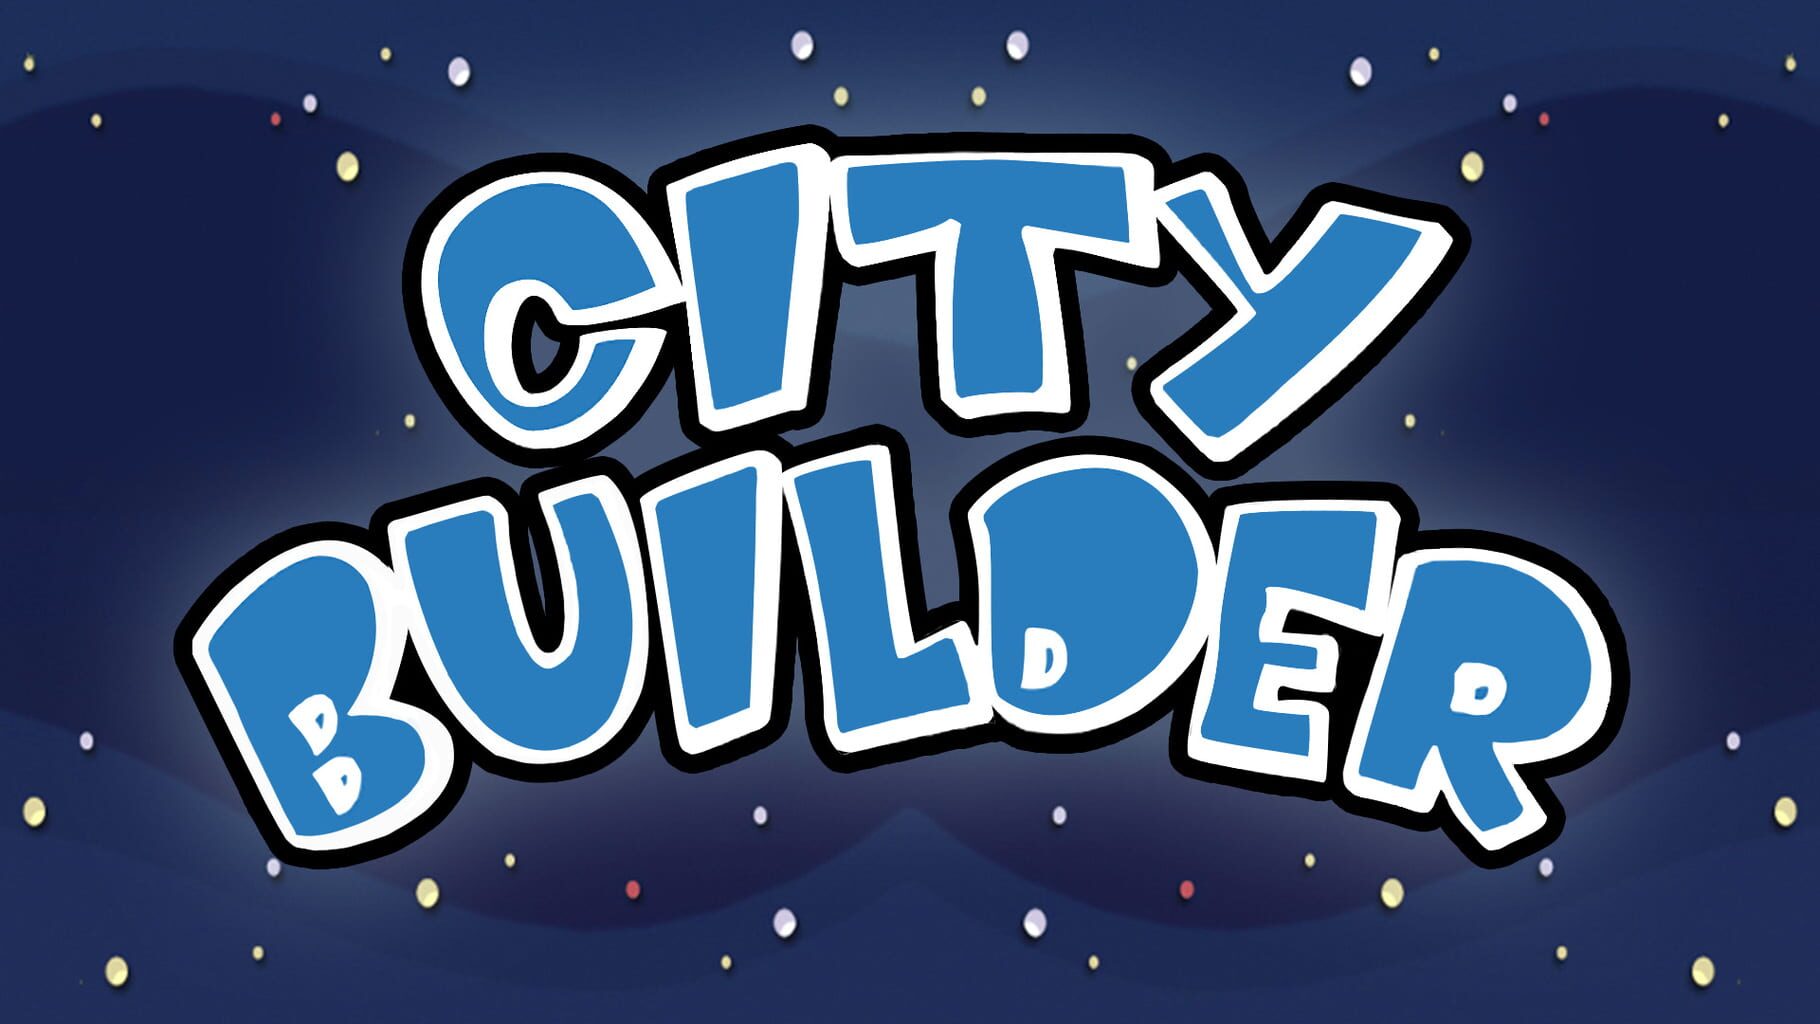 City Builder artwork